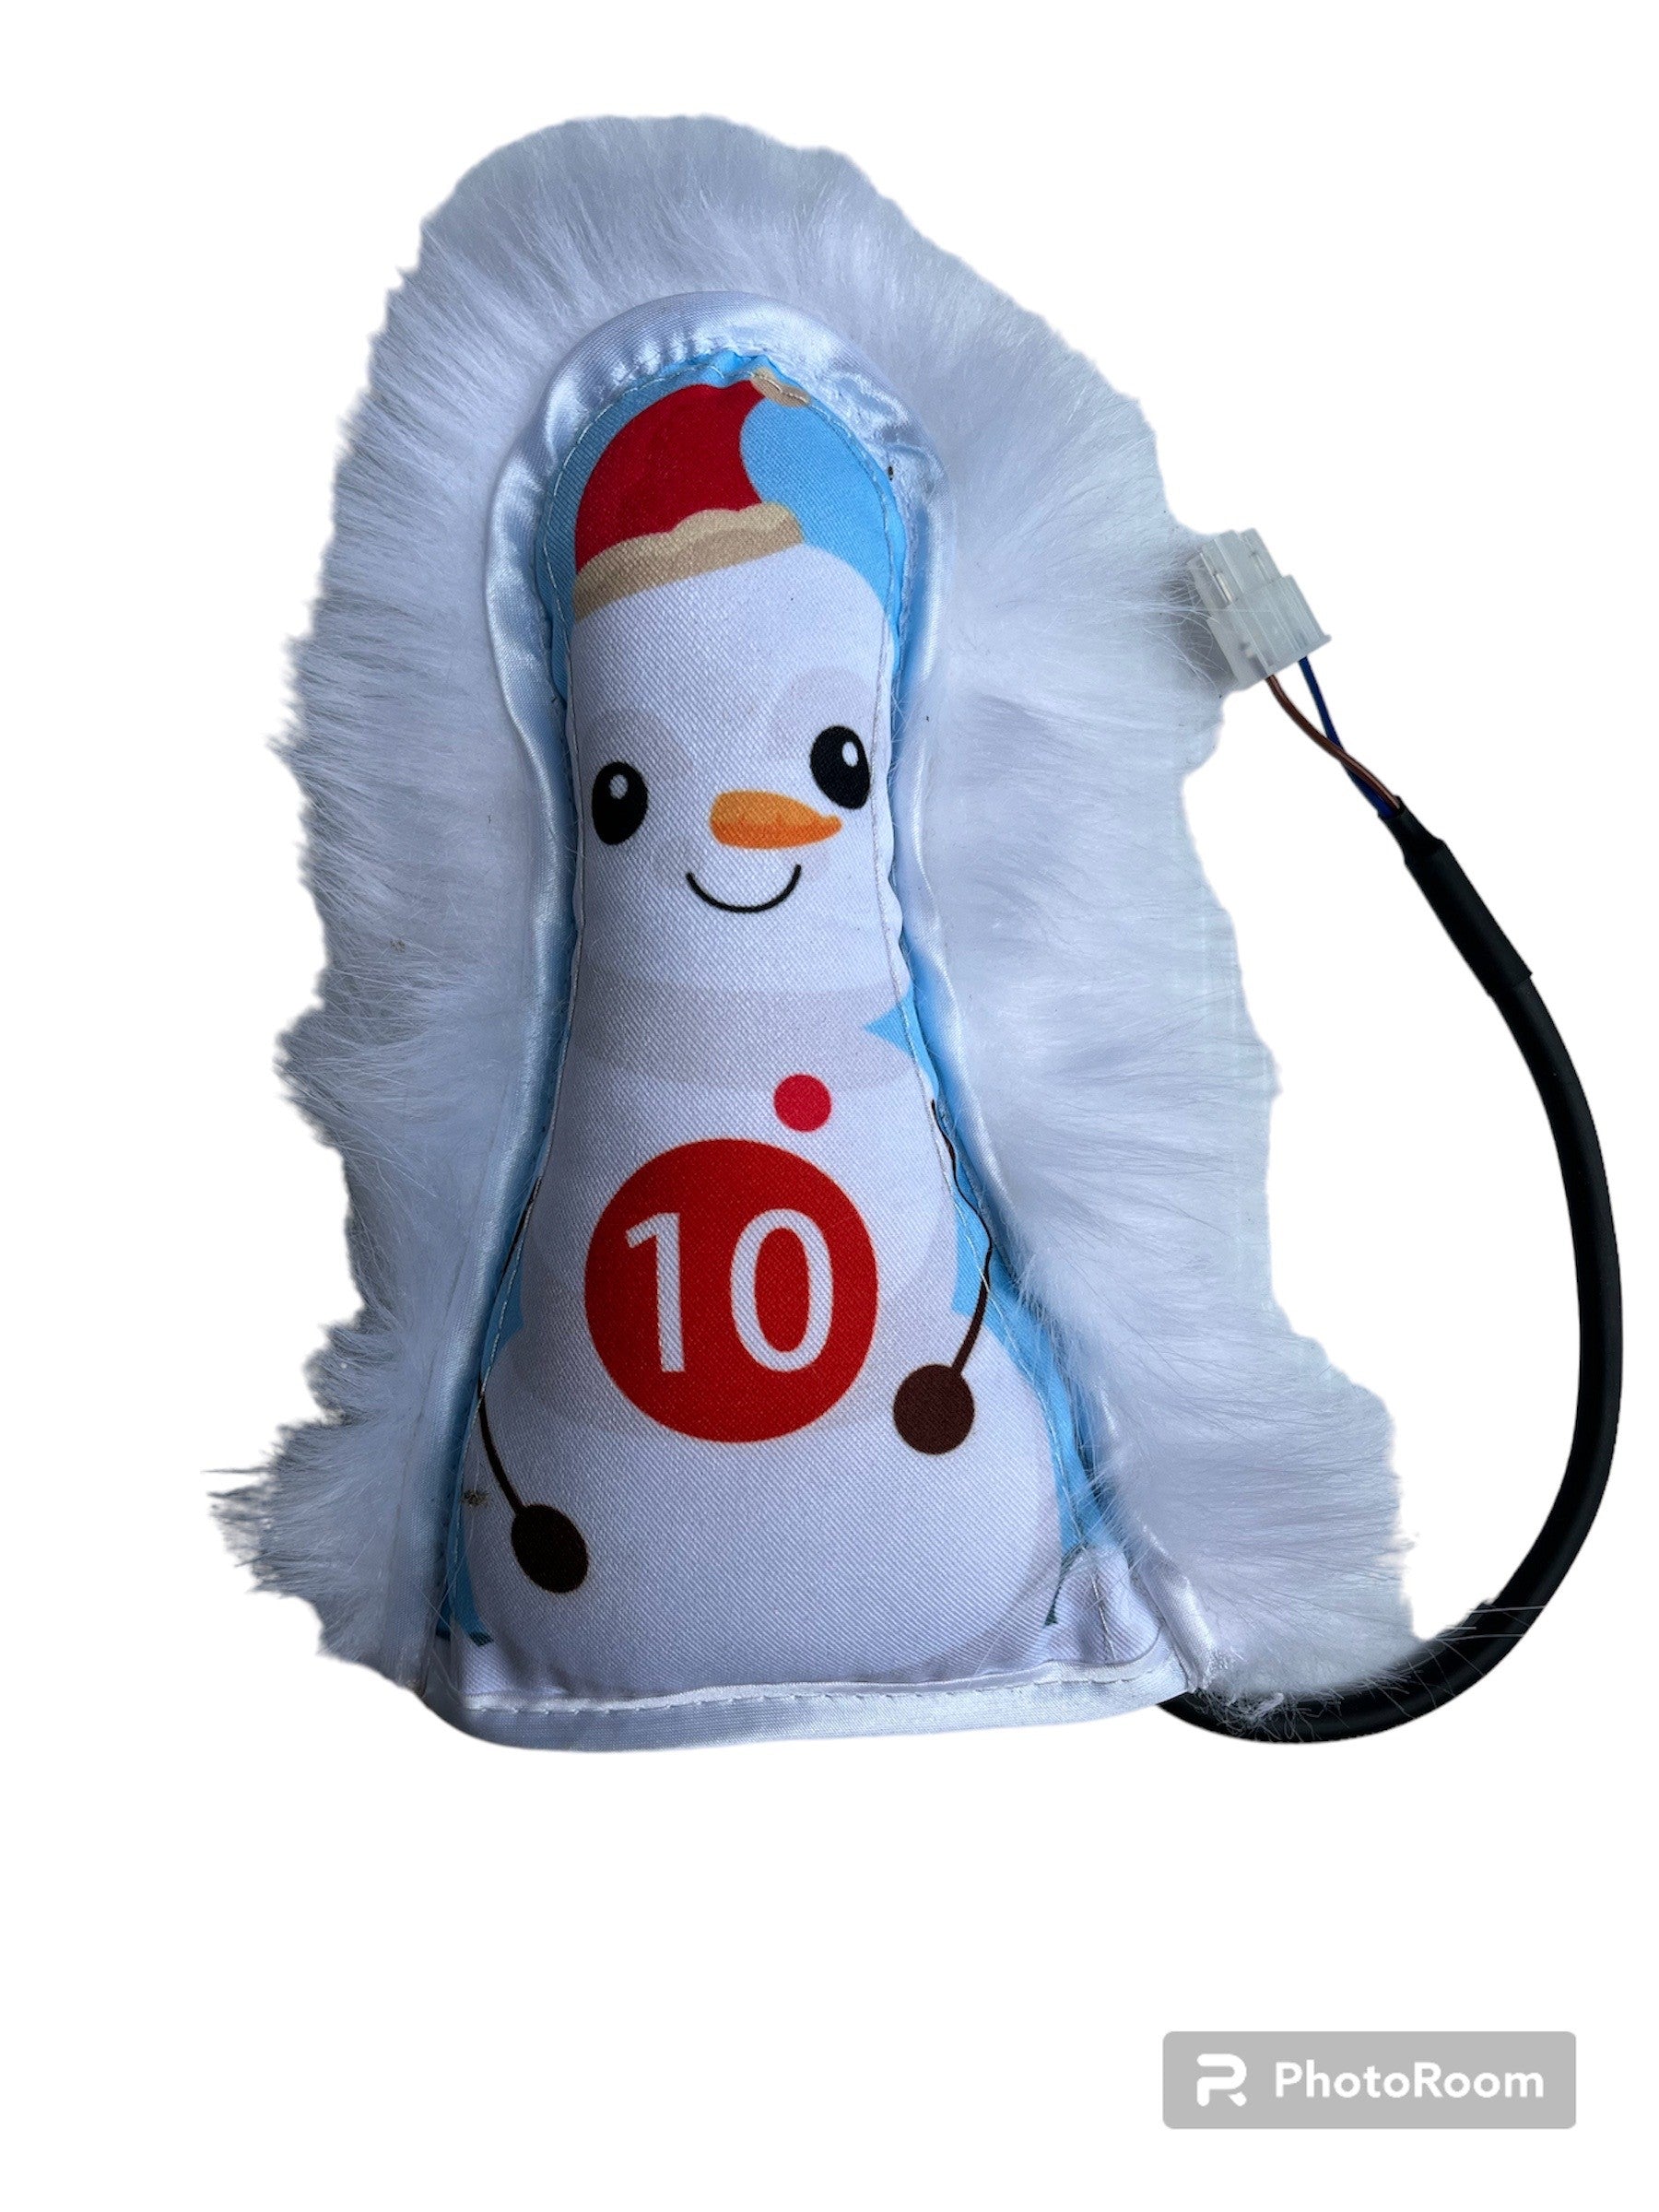 Snowman Target -10 Points - Snowman Challenge